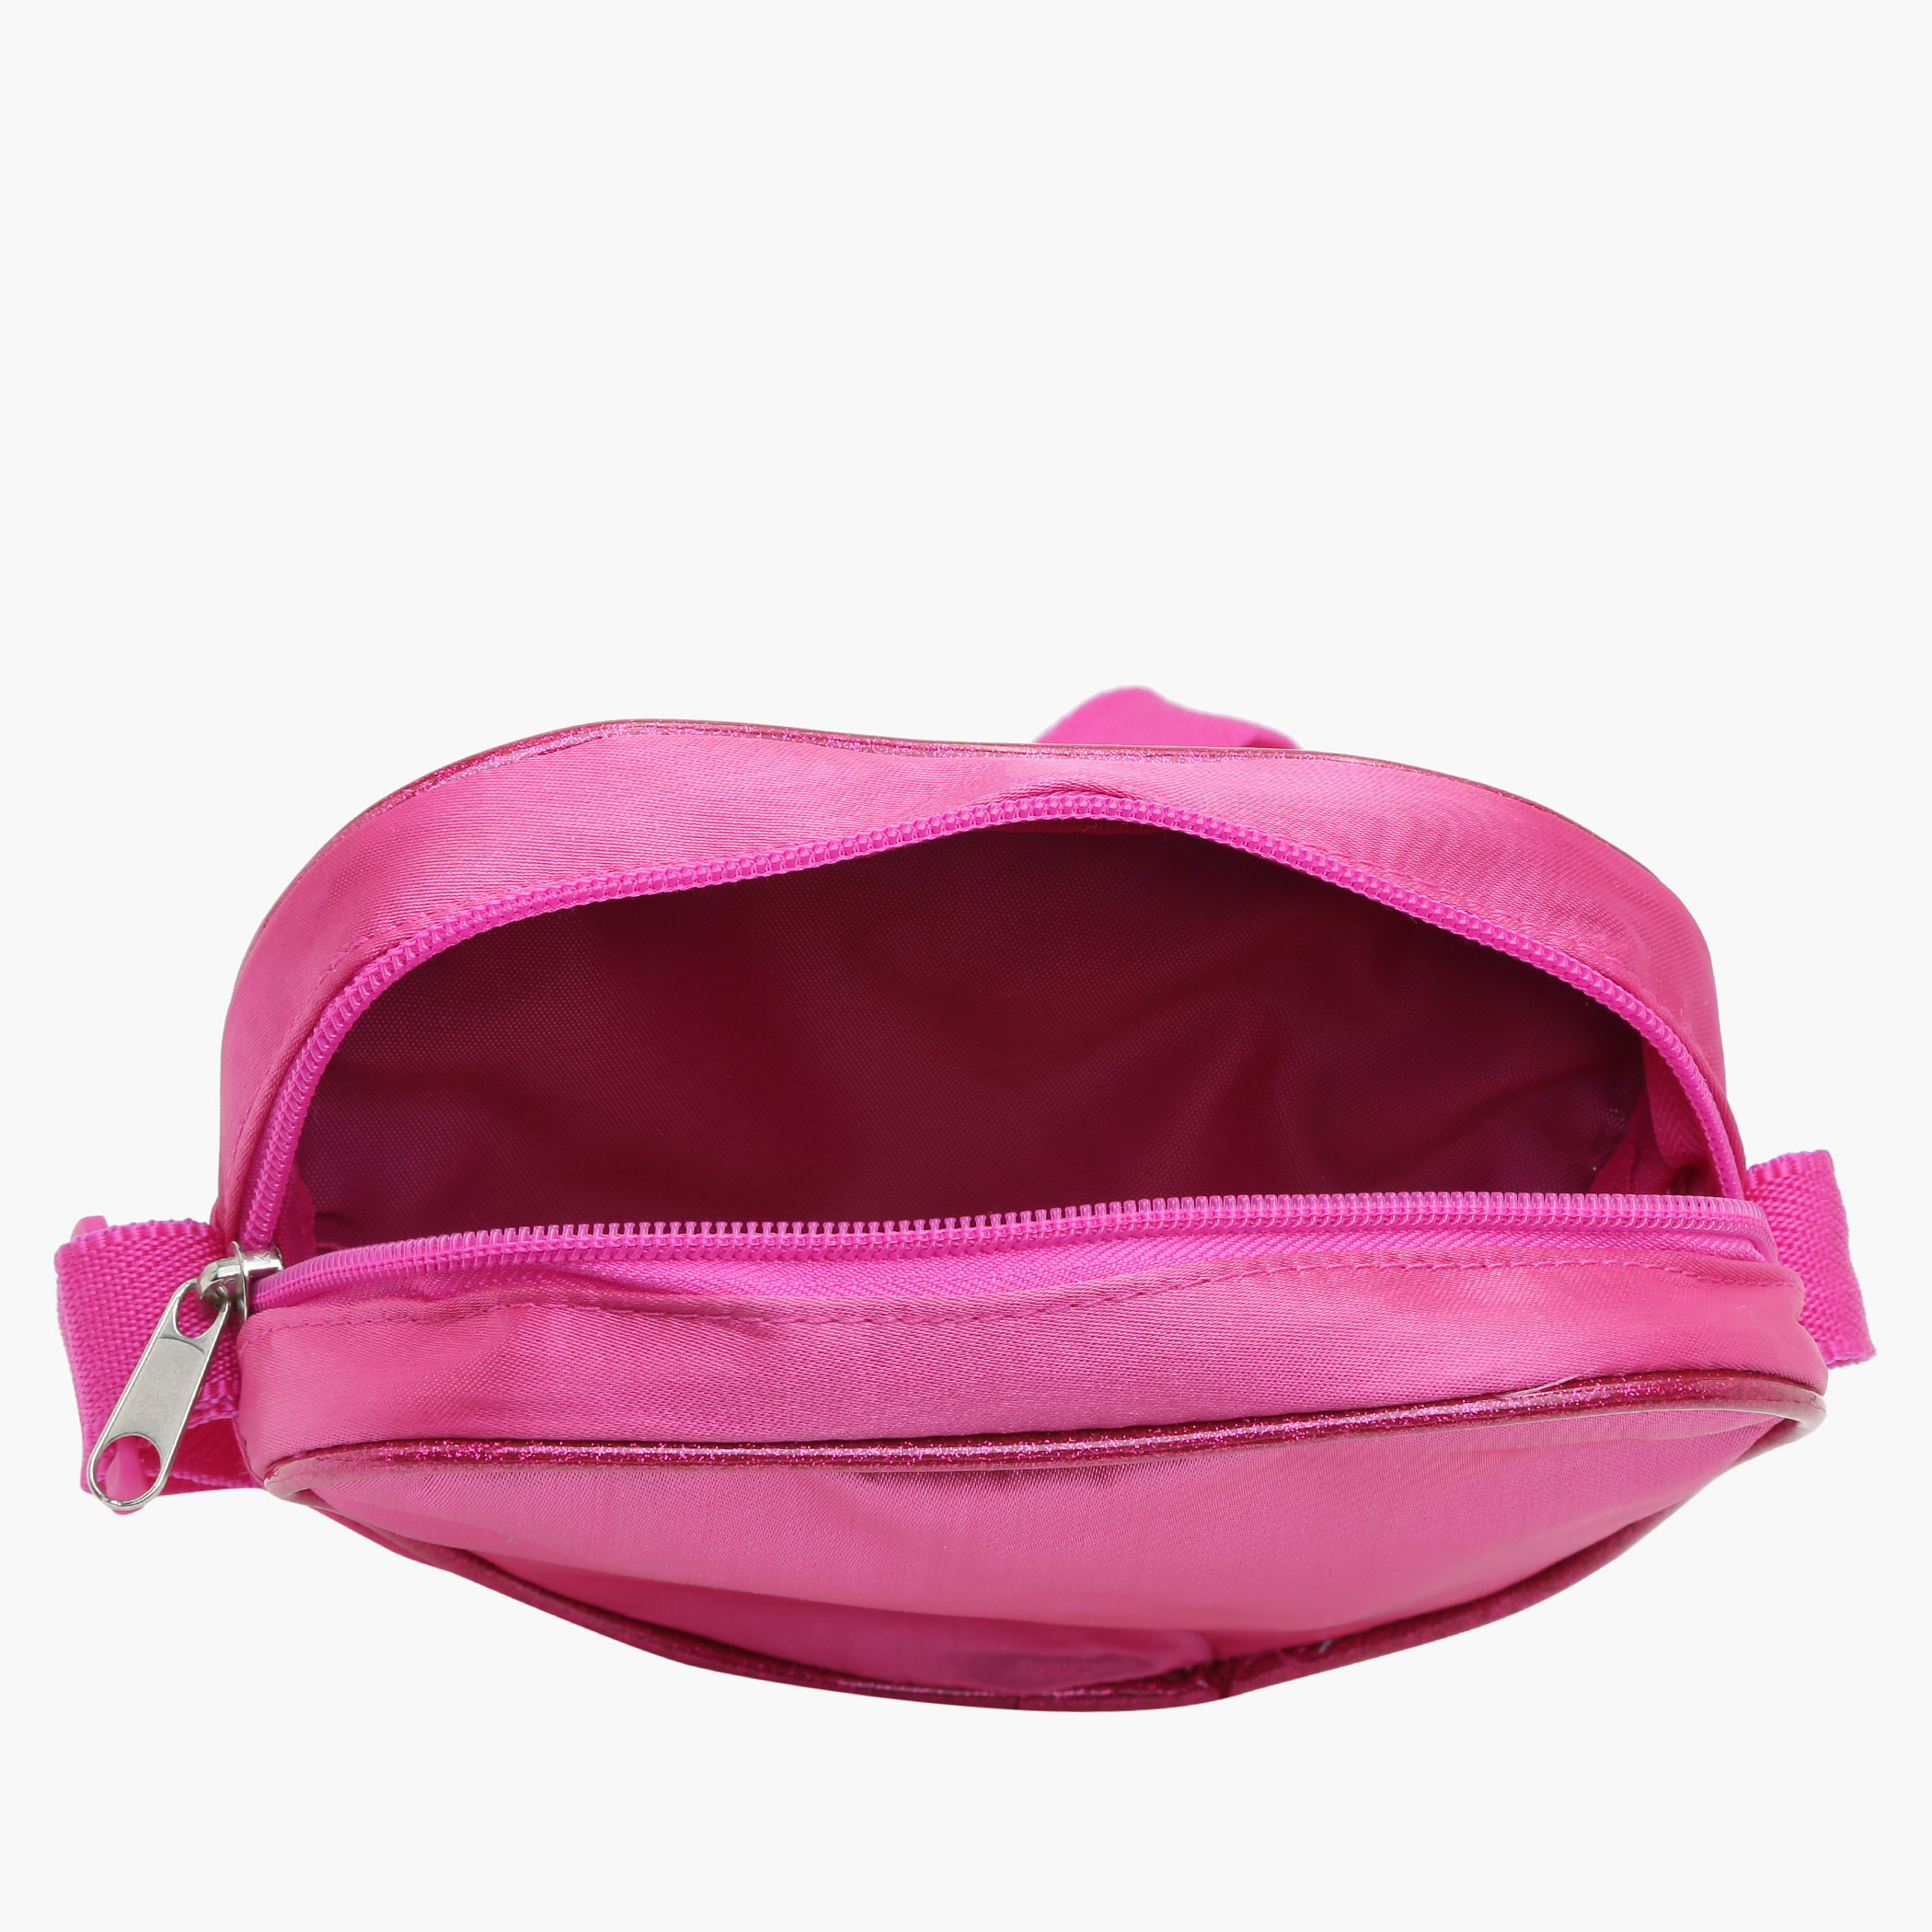 Dora the Explorer With Boots Hand Bag Purse Girls And Pink Dora Sunglasses  | eBay